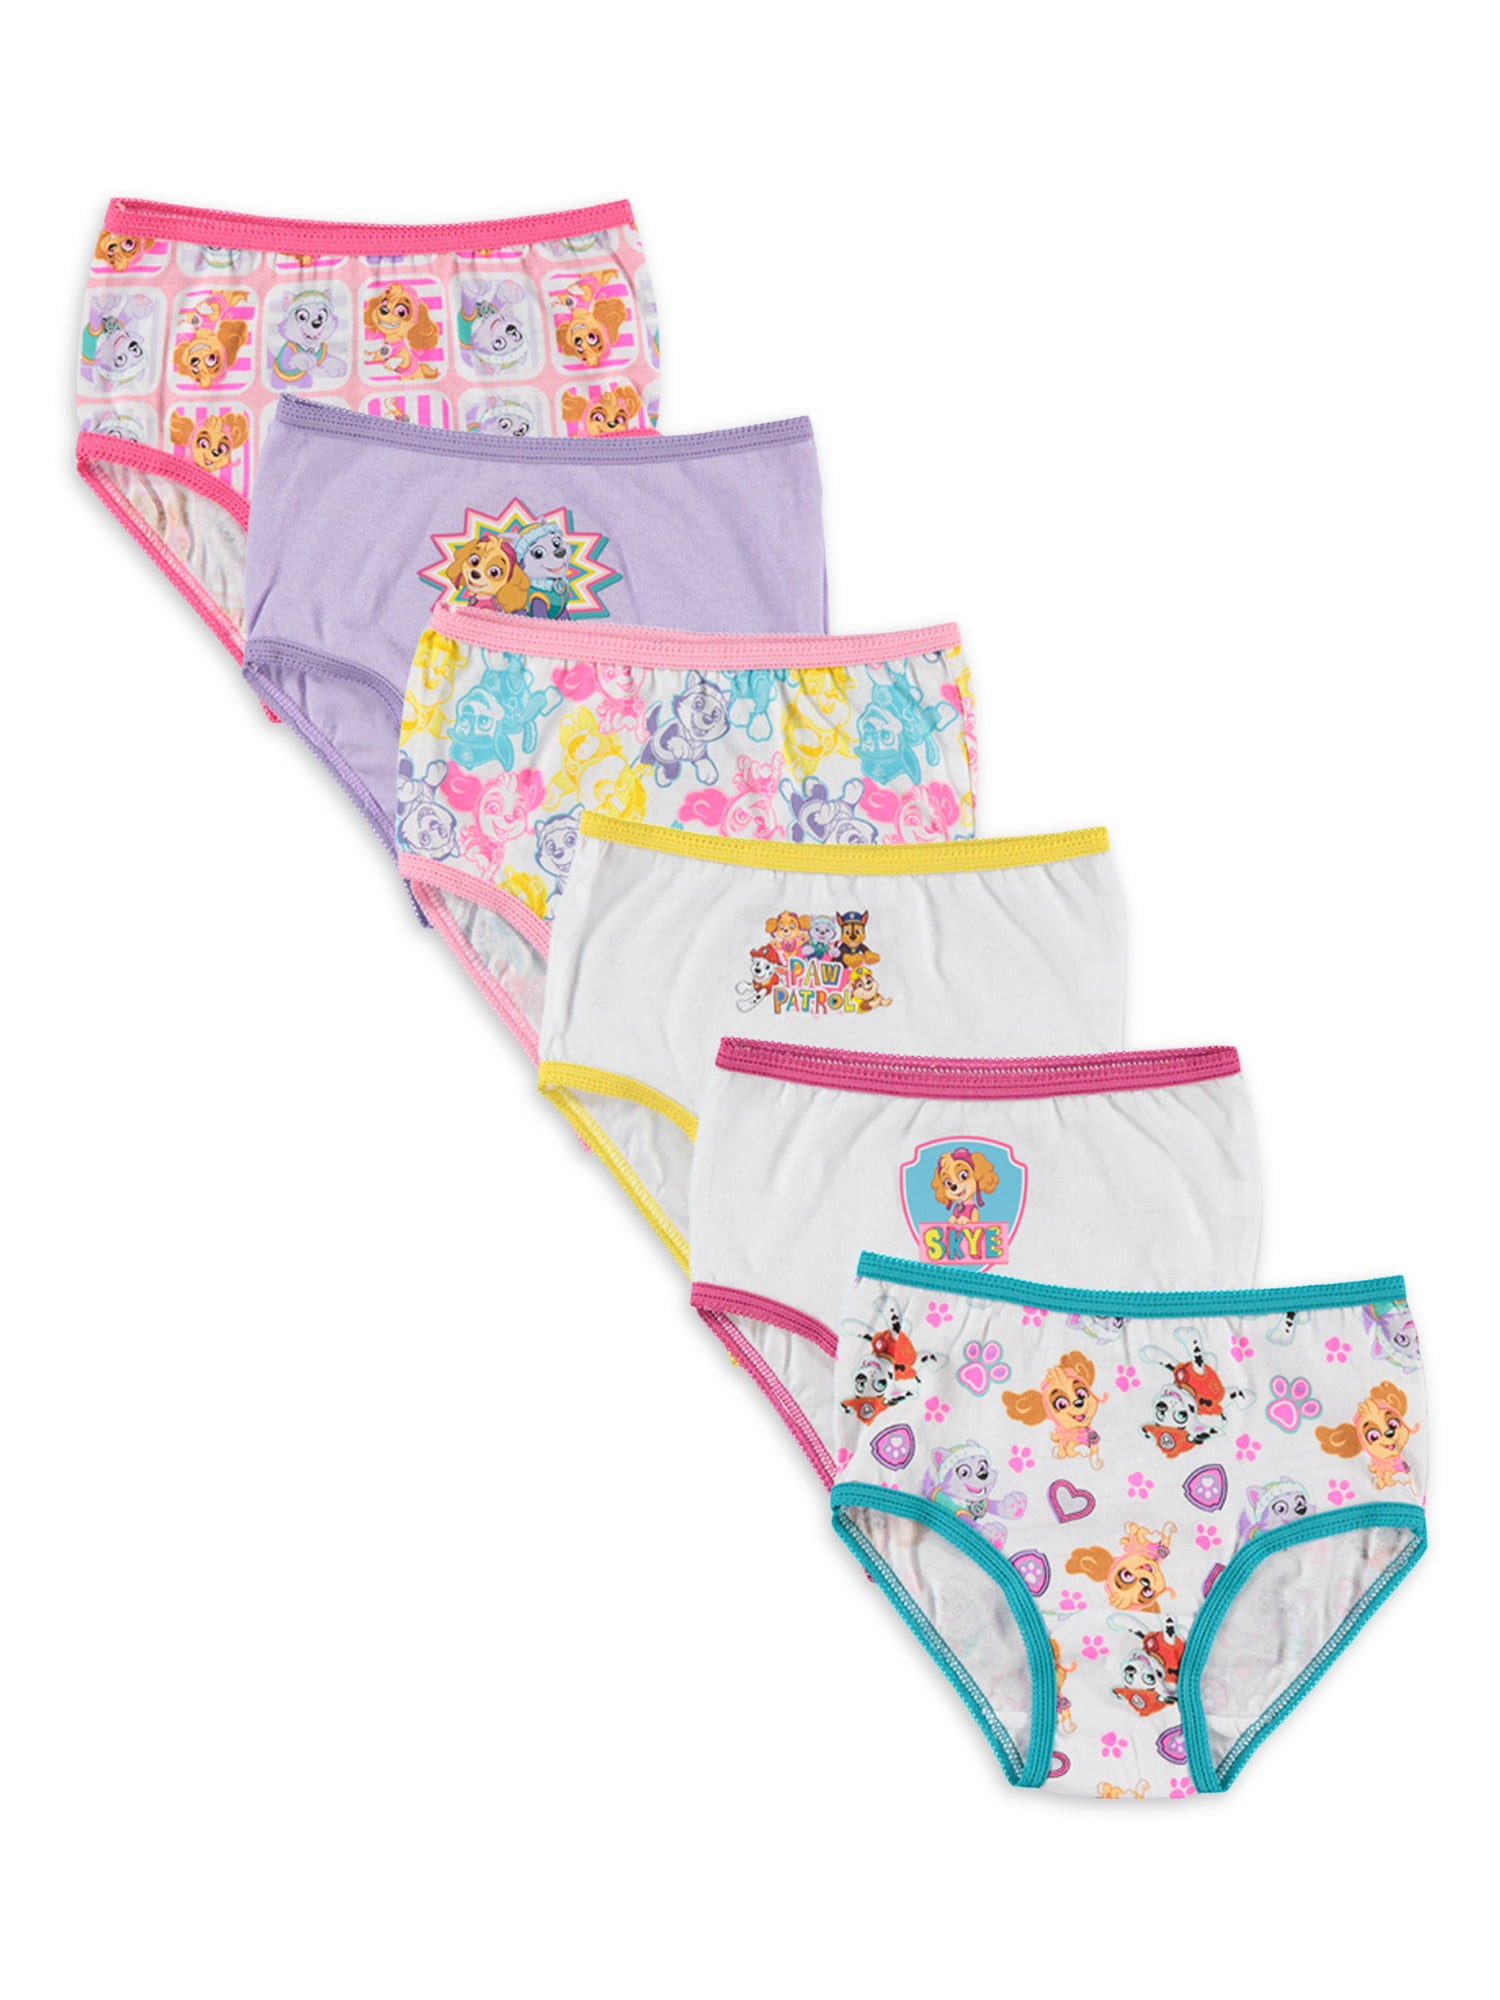 Mejores ofertas e historial de precios de Paw Patrol Toddler Girls Underwear,  6 Pack Sizes 2T-4T en